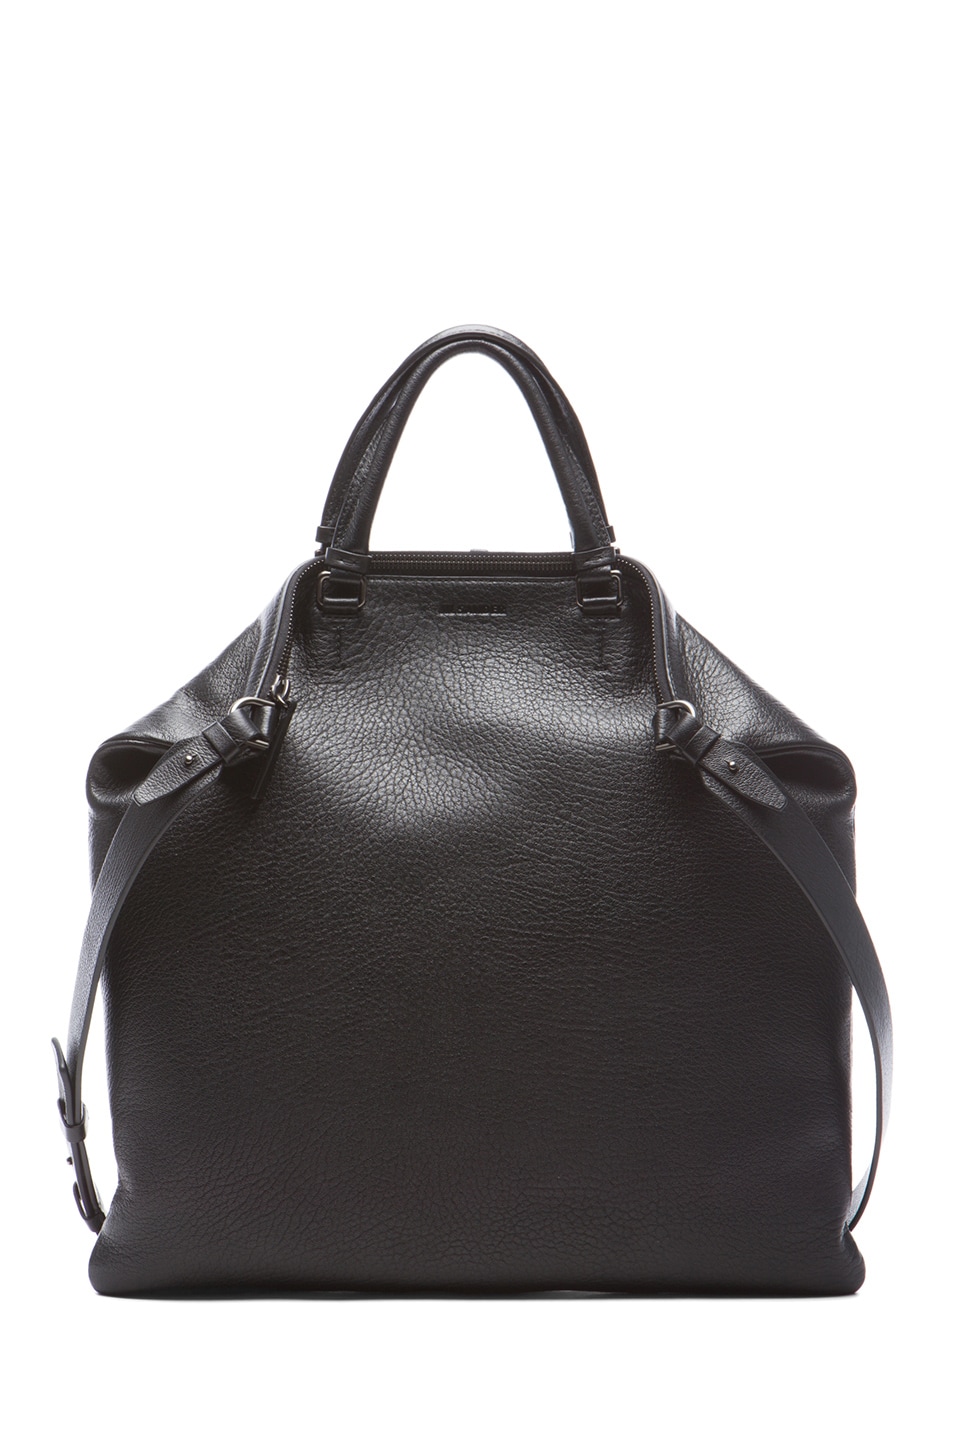 Jil Sander Folding Bag in Black | FWRD